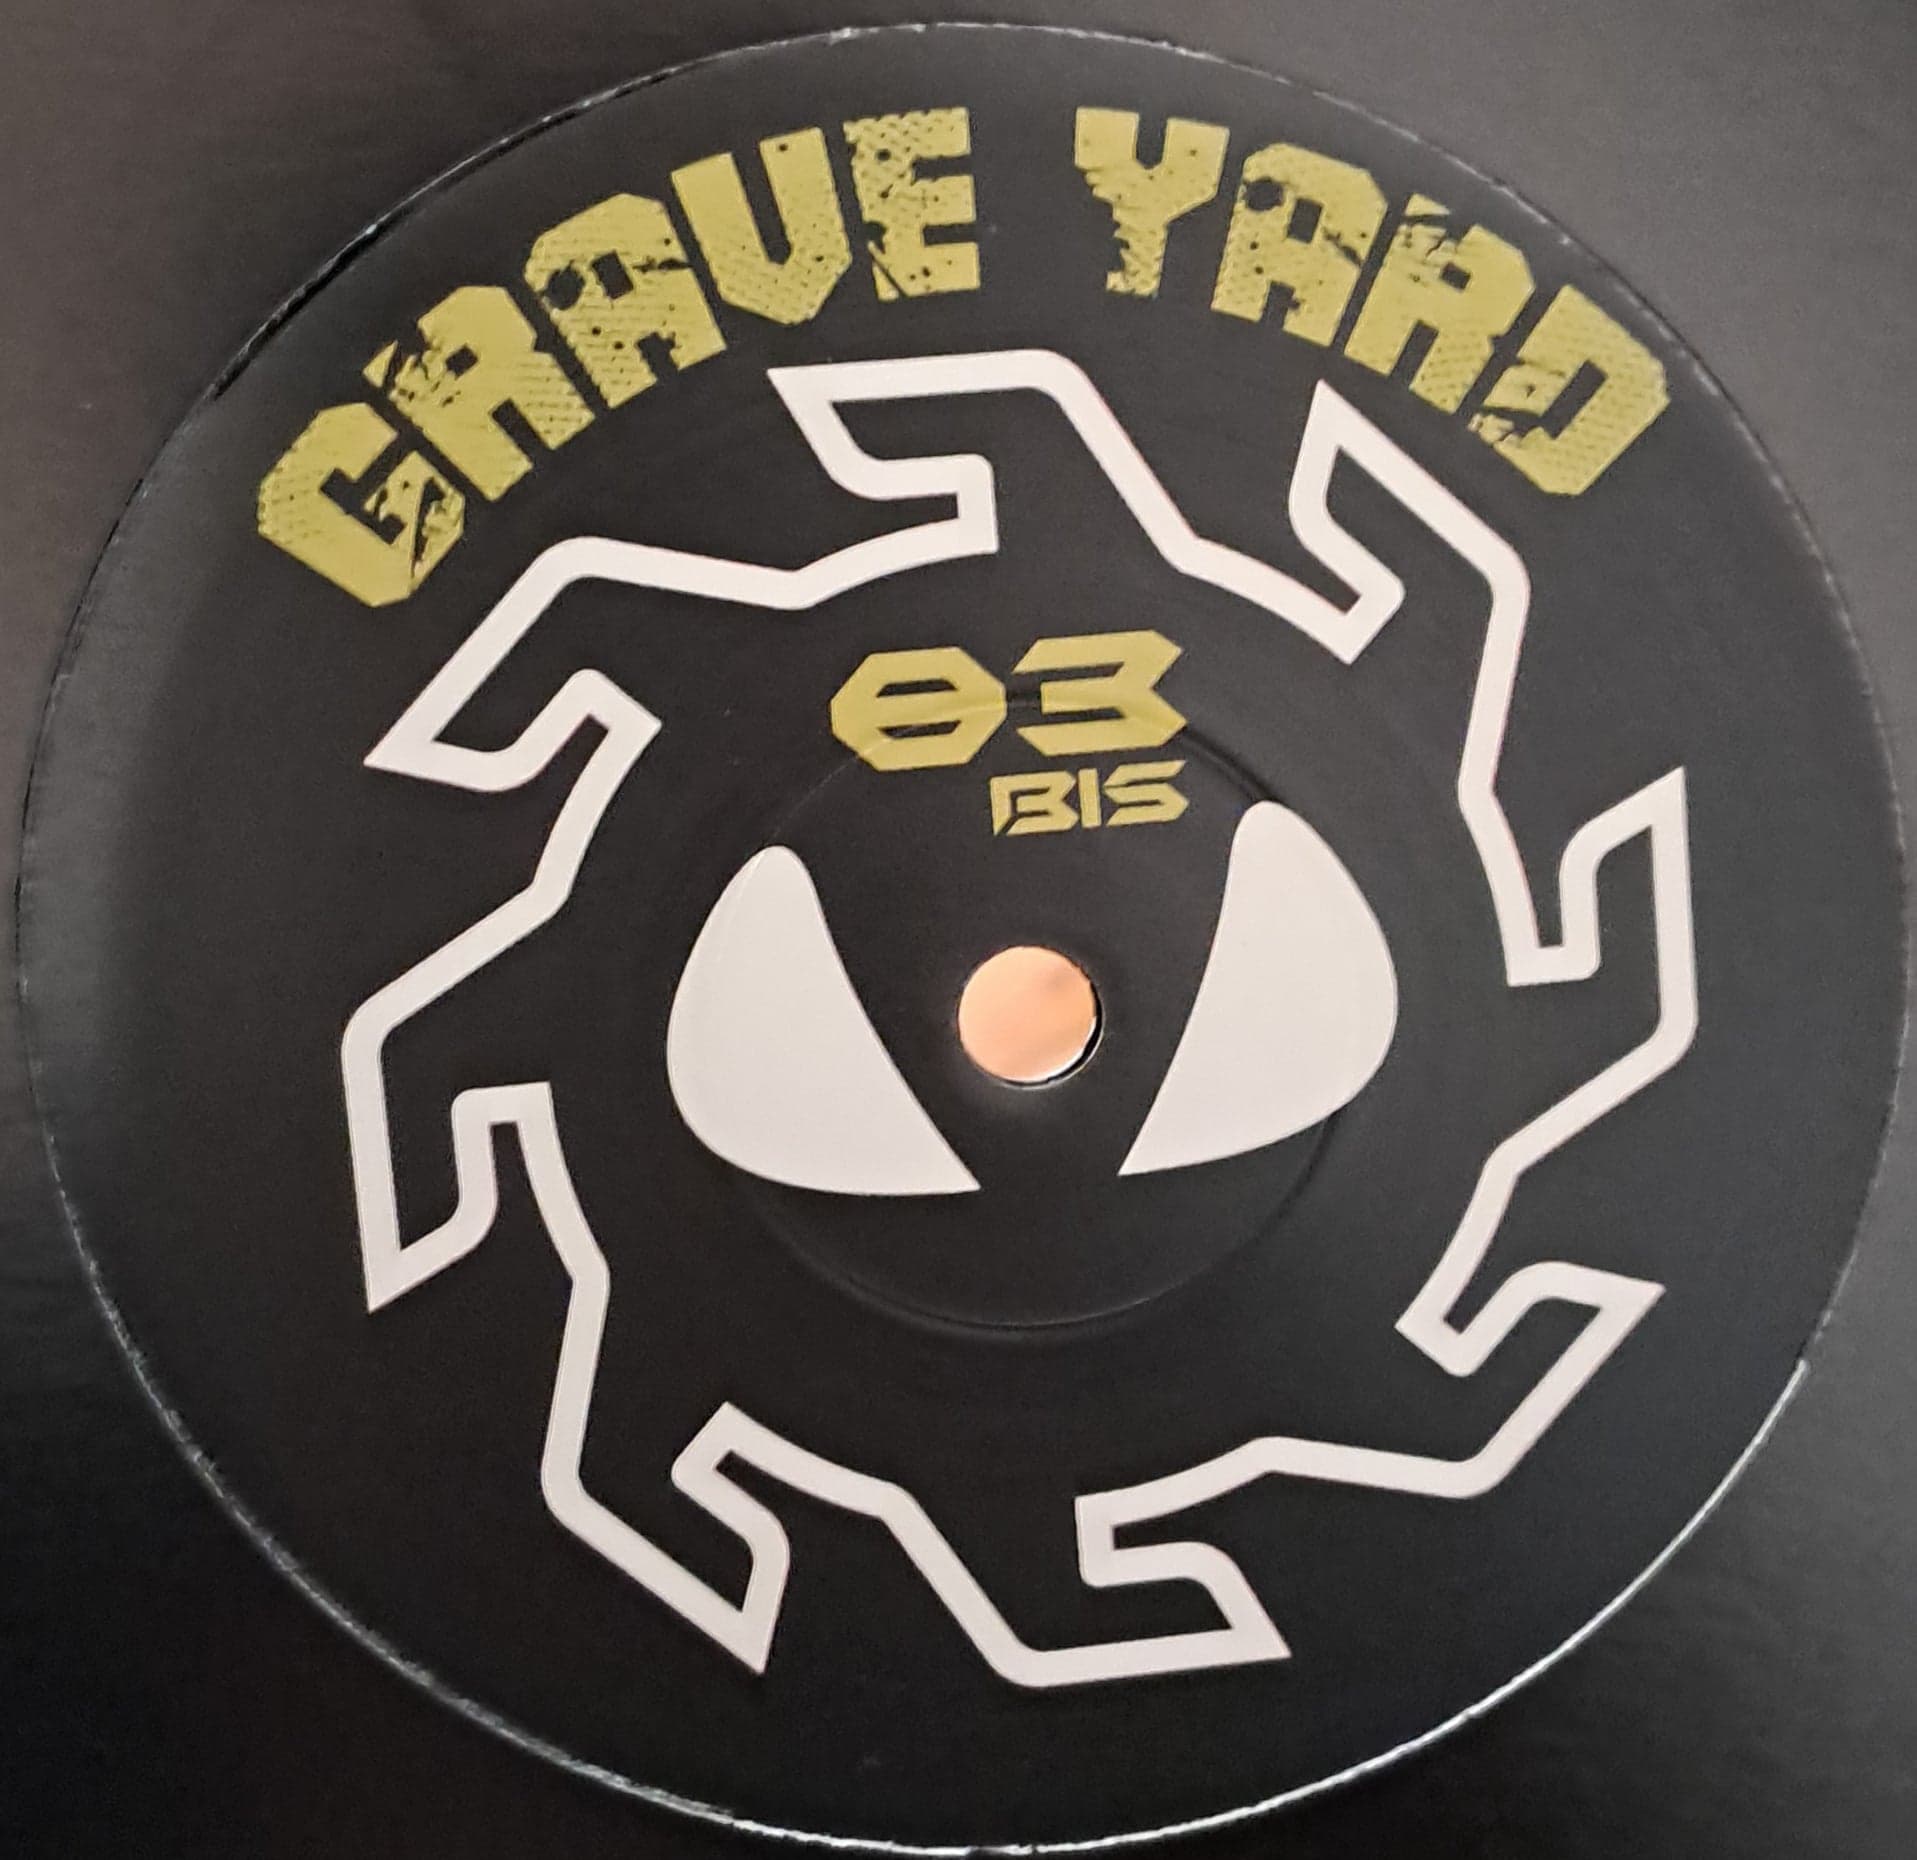 Graveyard 03 BIS RP - vinyle hardcore